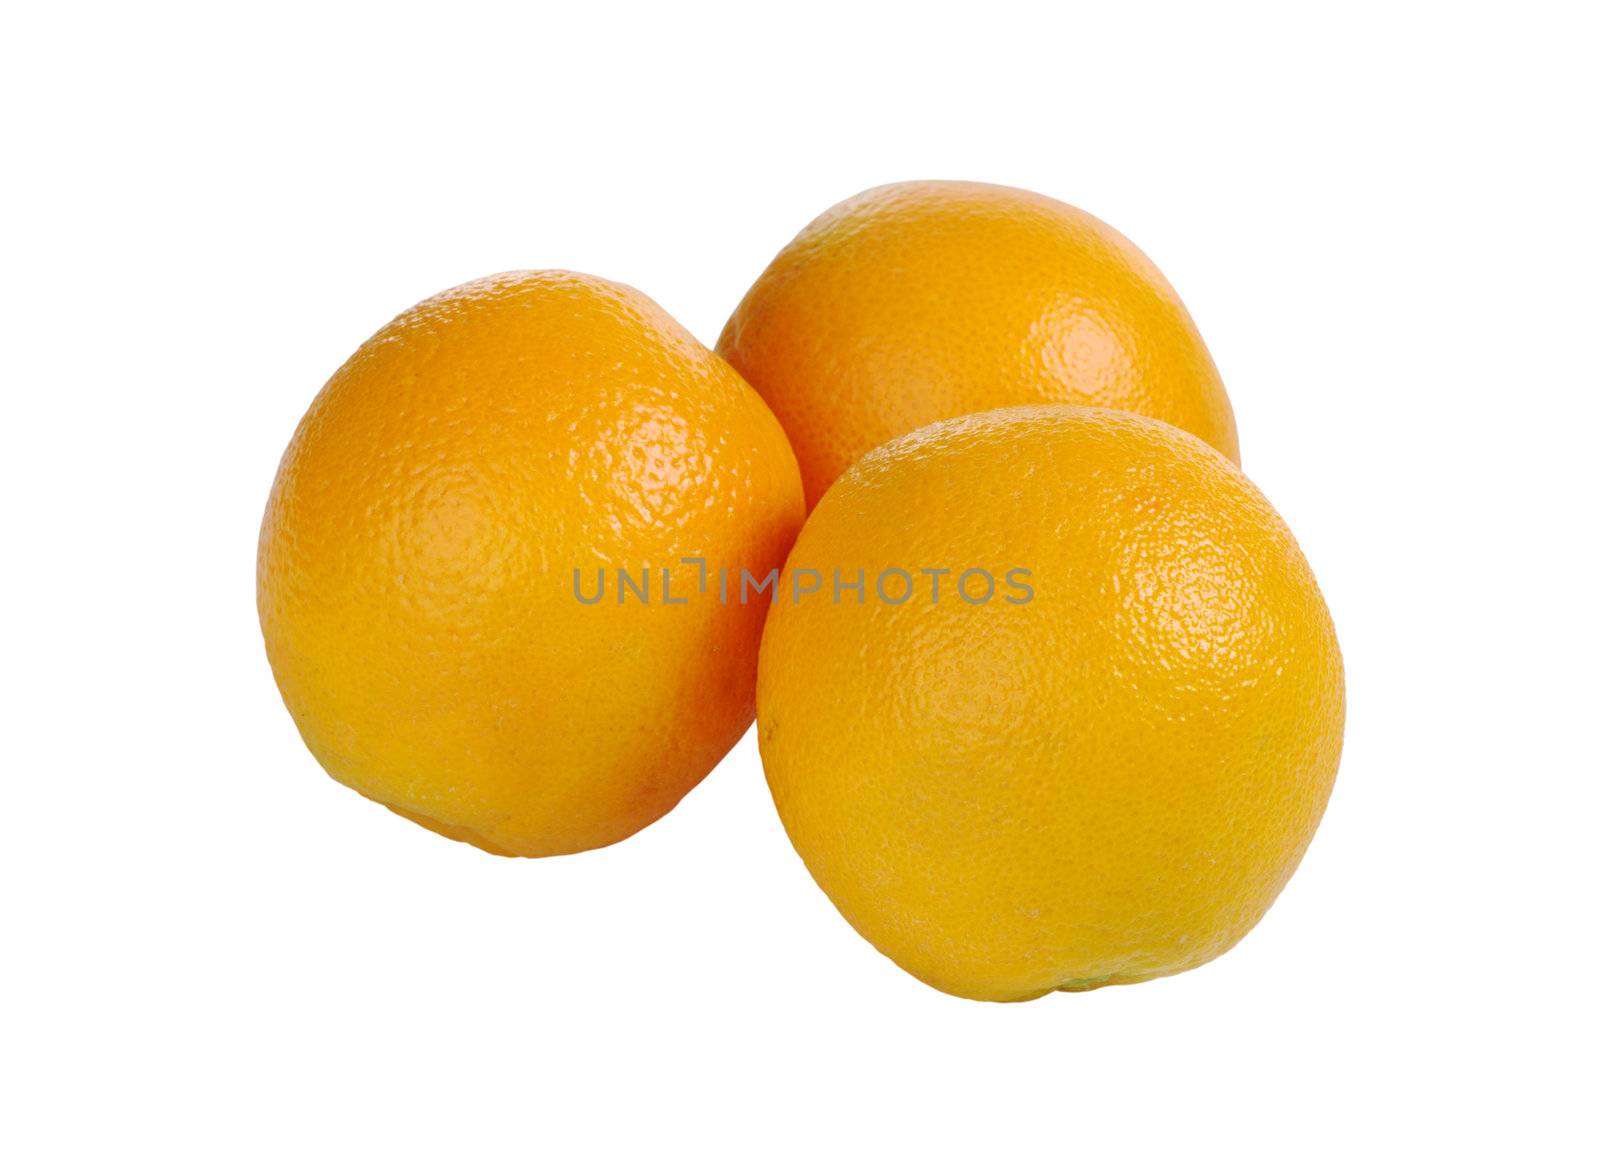 Oranges by sven